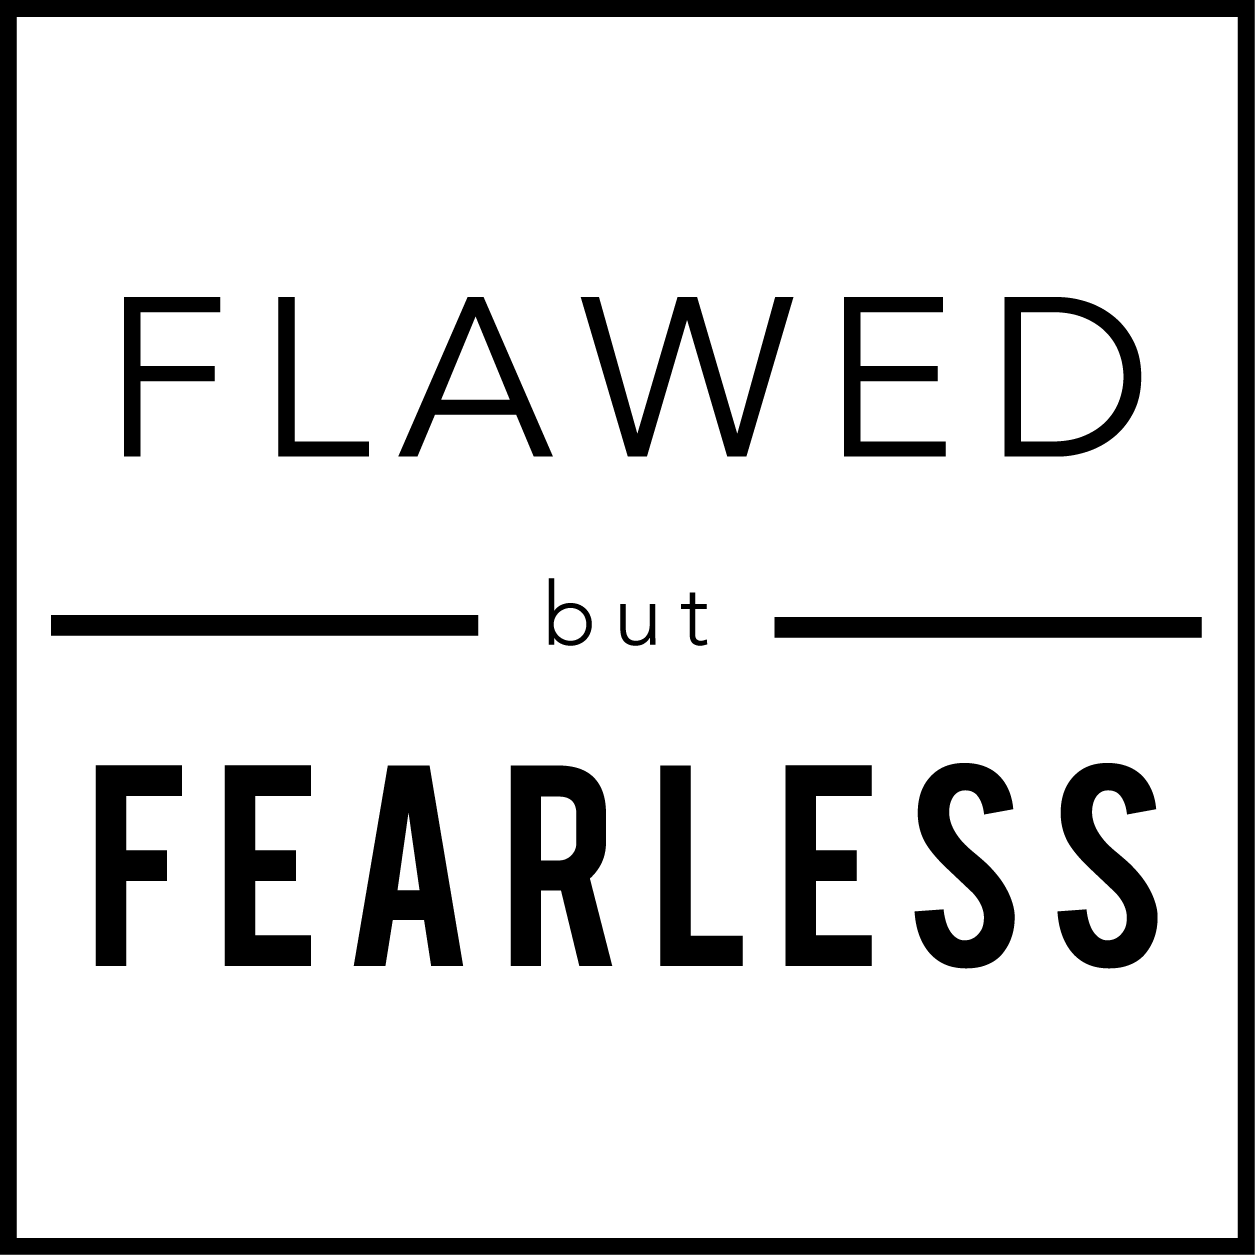 Coolidge Wall Logo